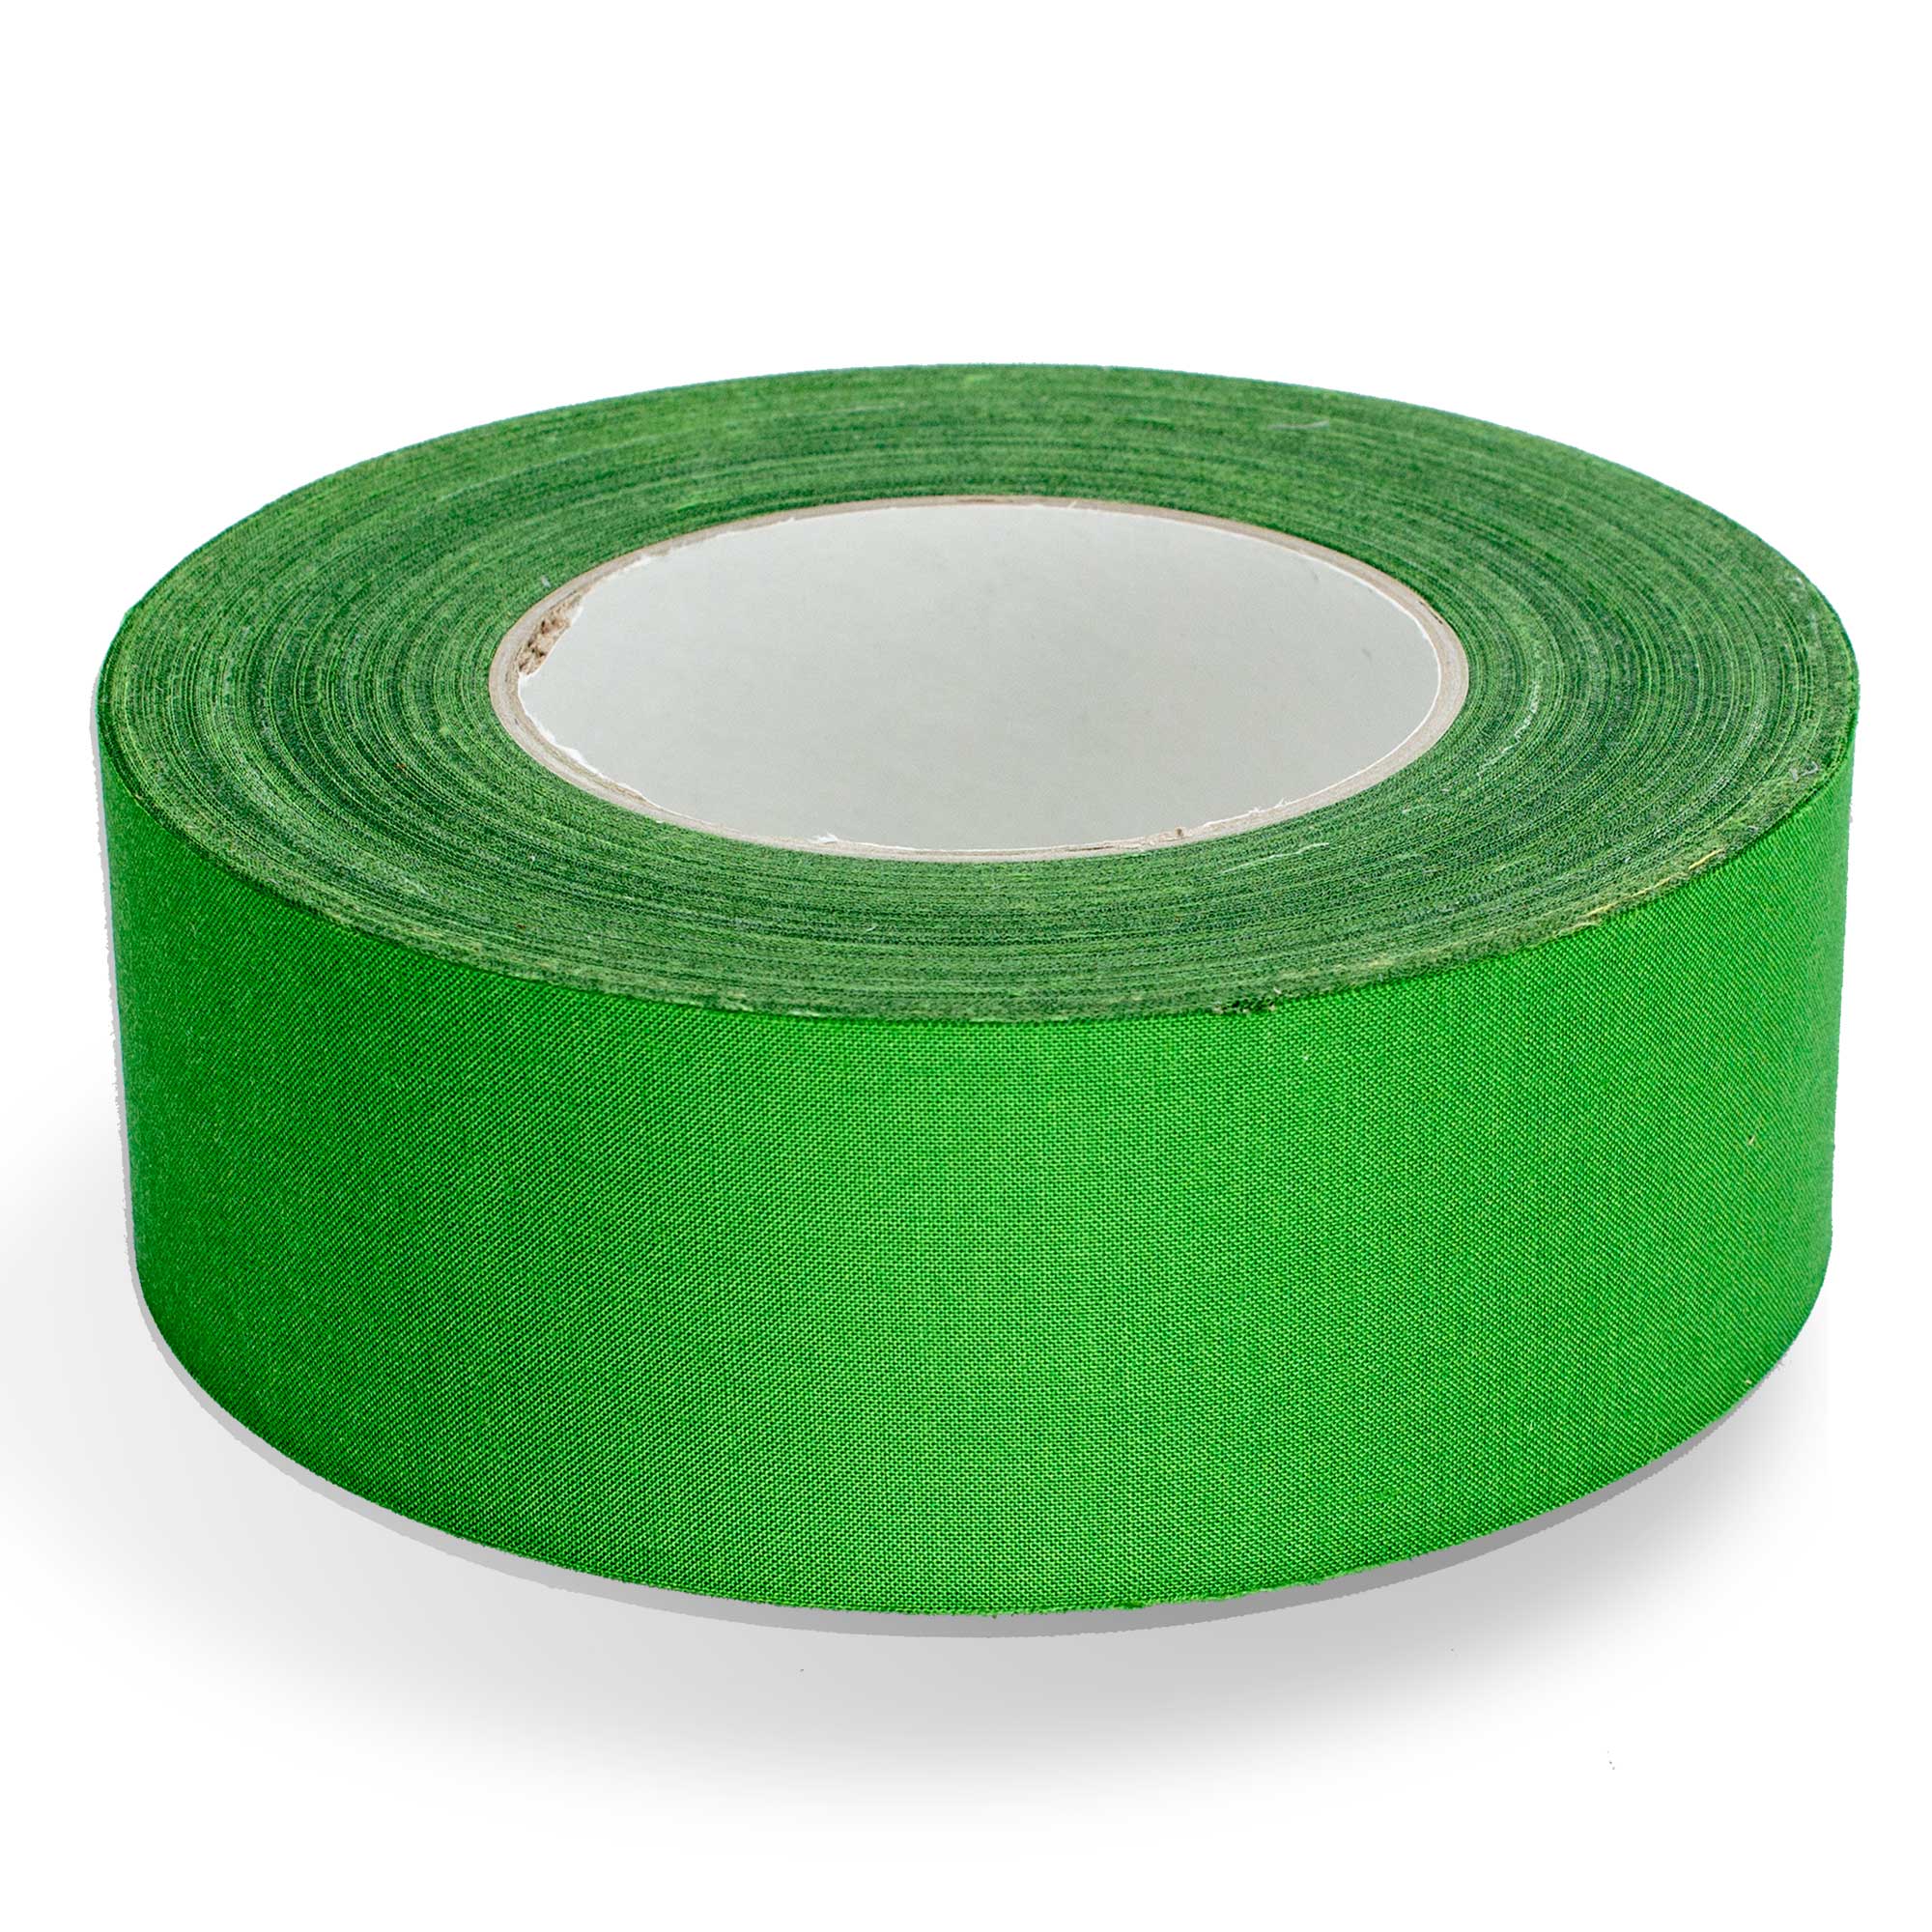 unpackaged green 5cm wide tape